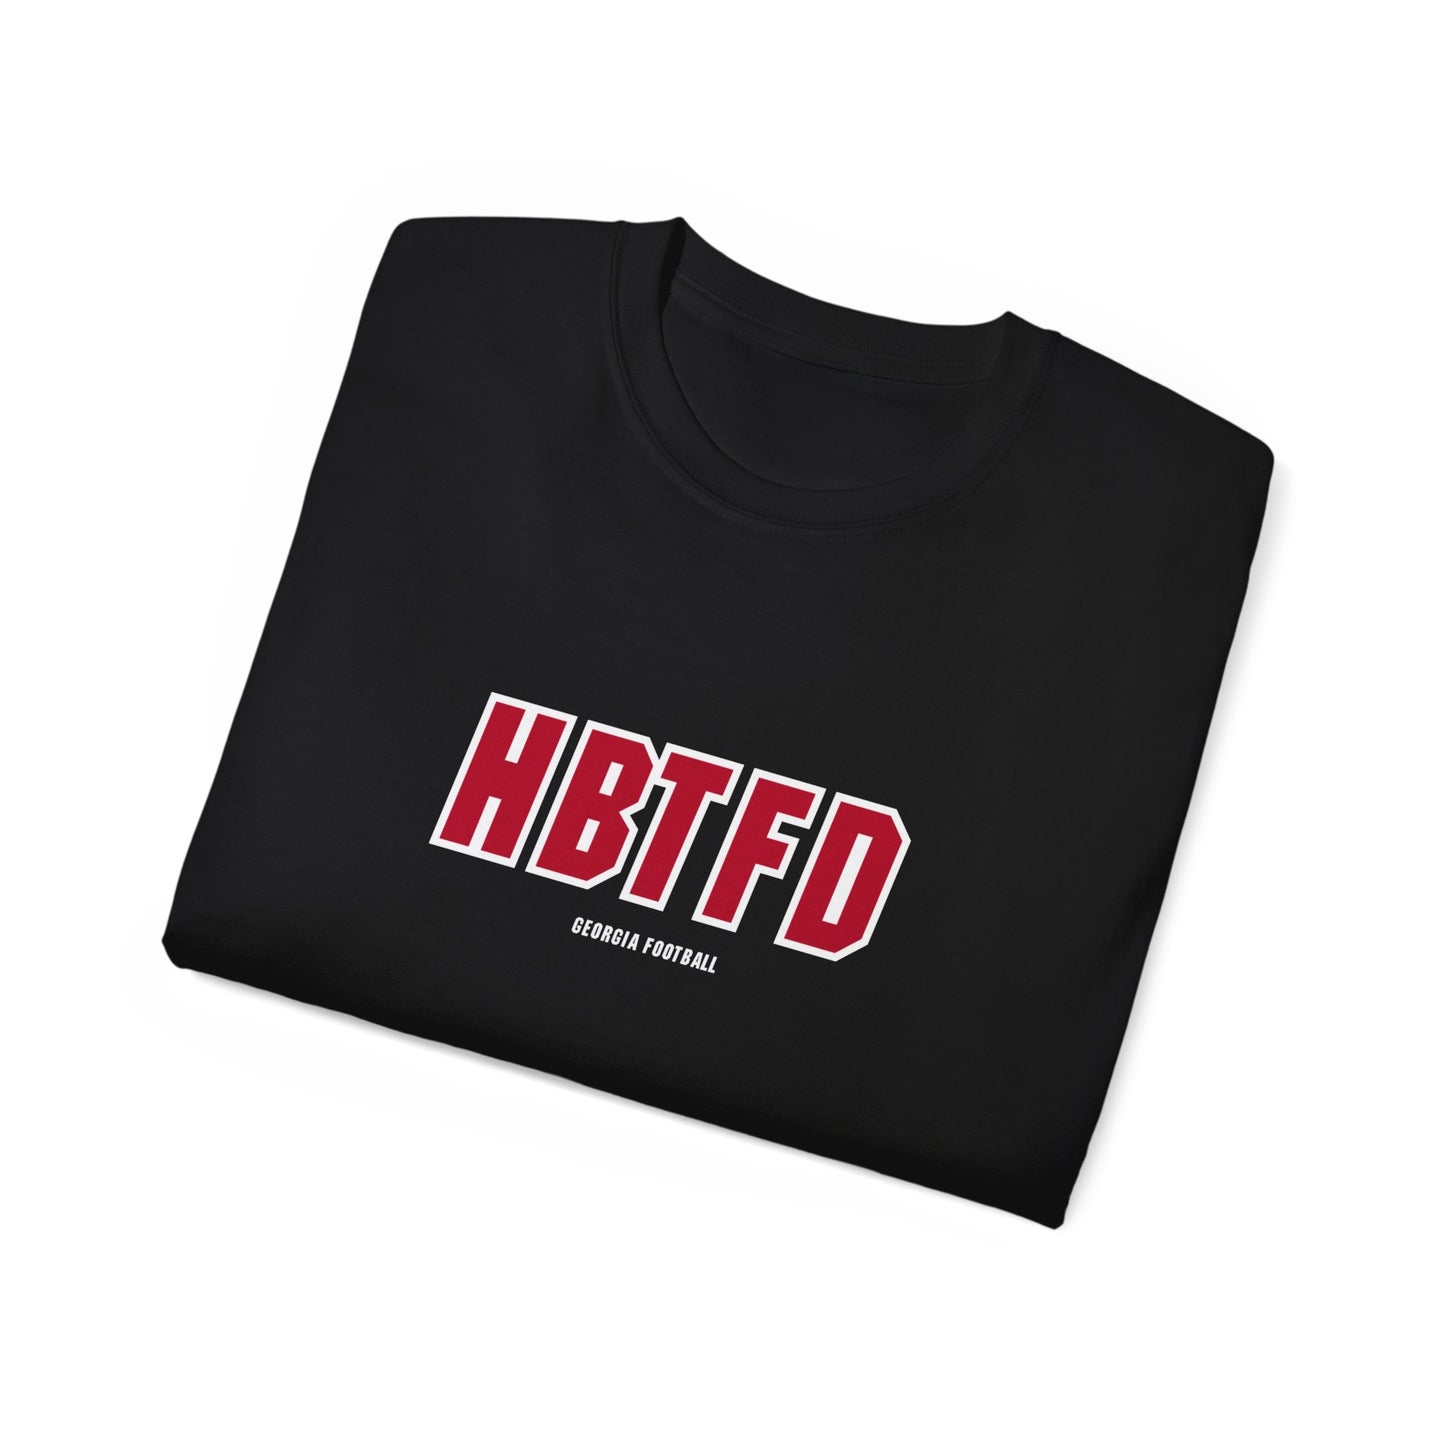 HBTFD Black T-Shirt